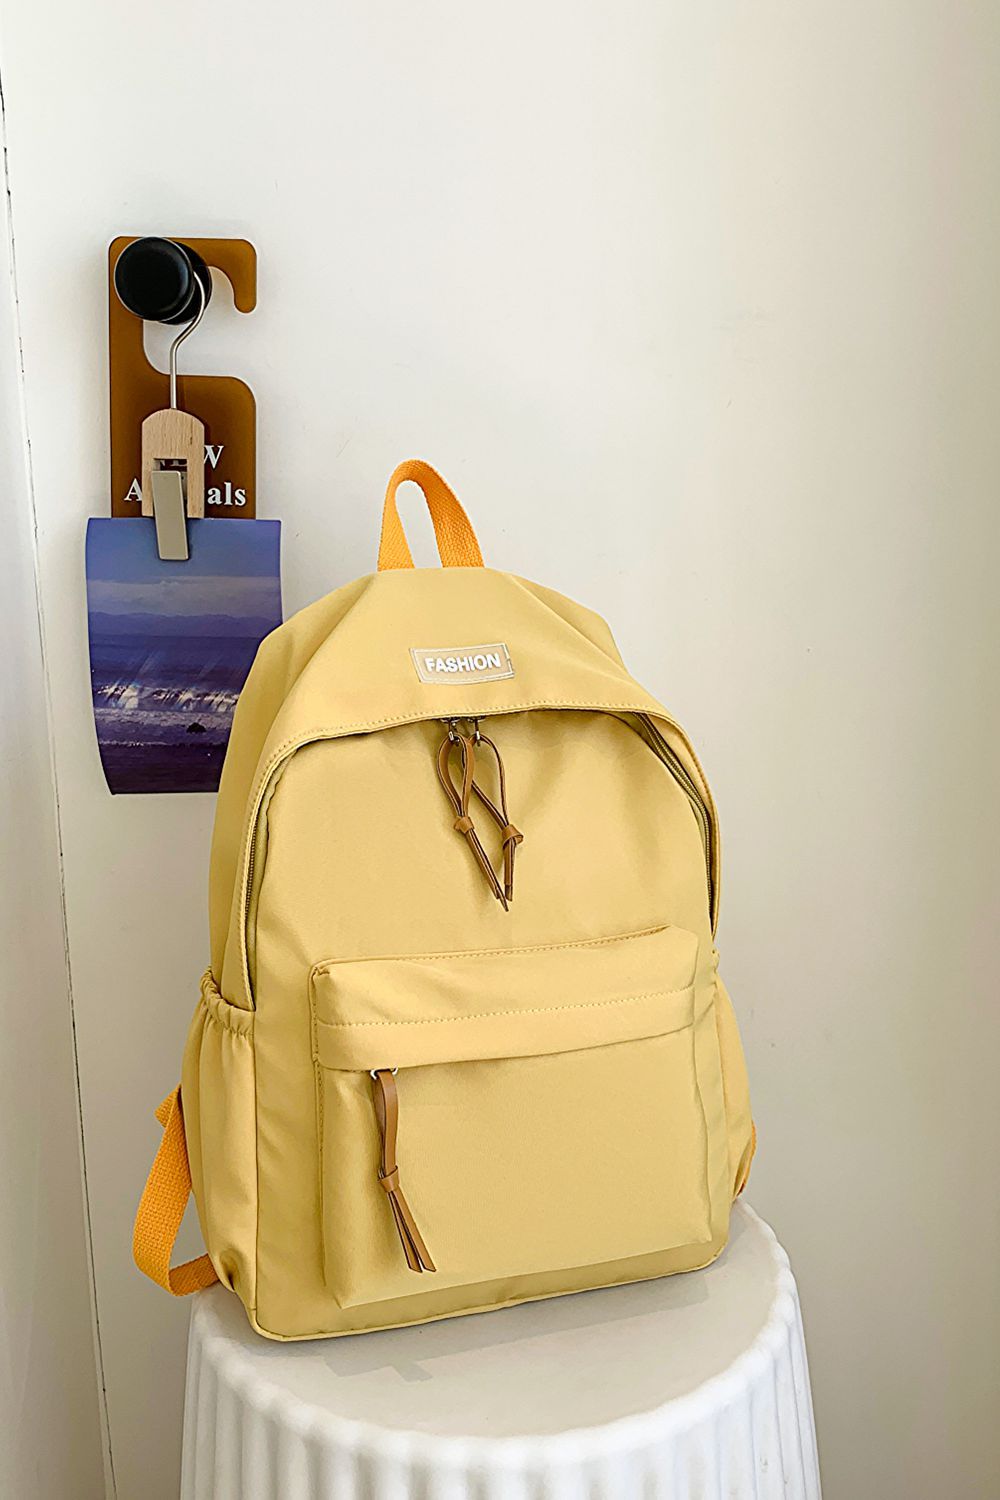 Baeful FASHION Polyester Backpack.